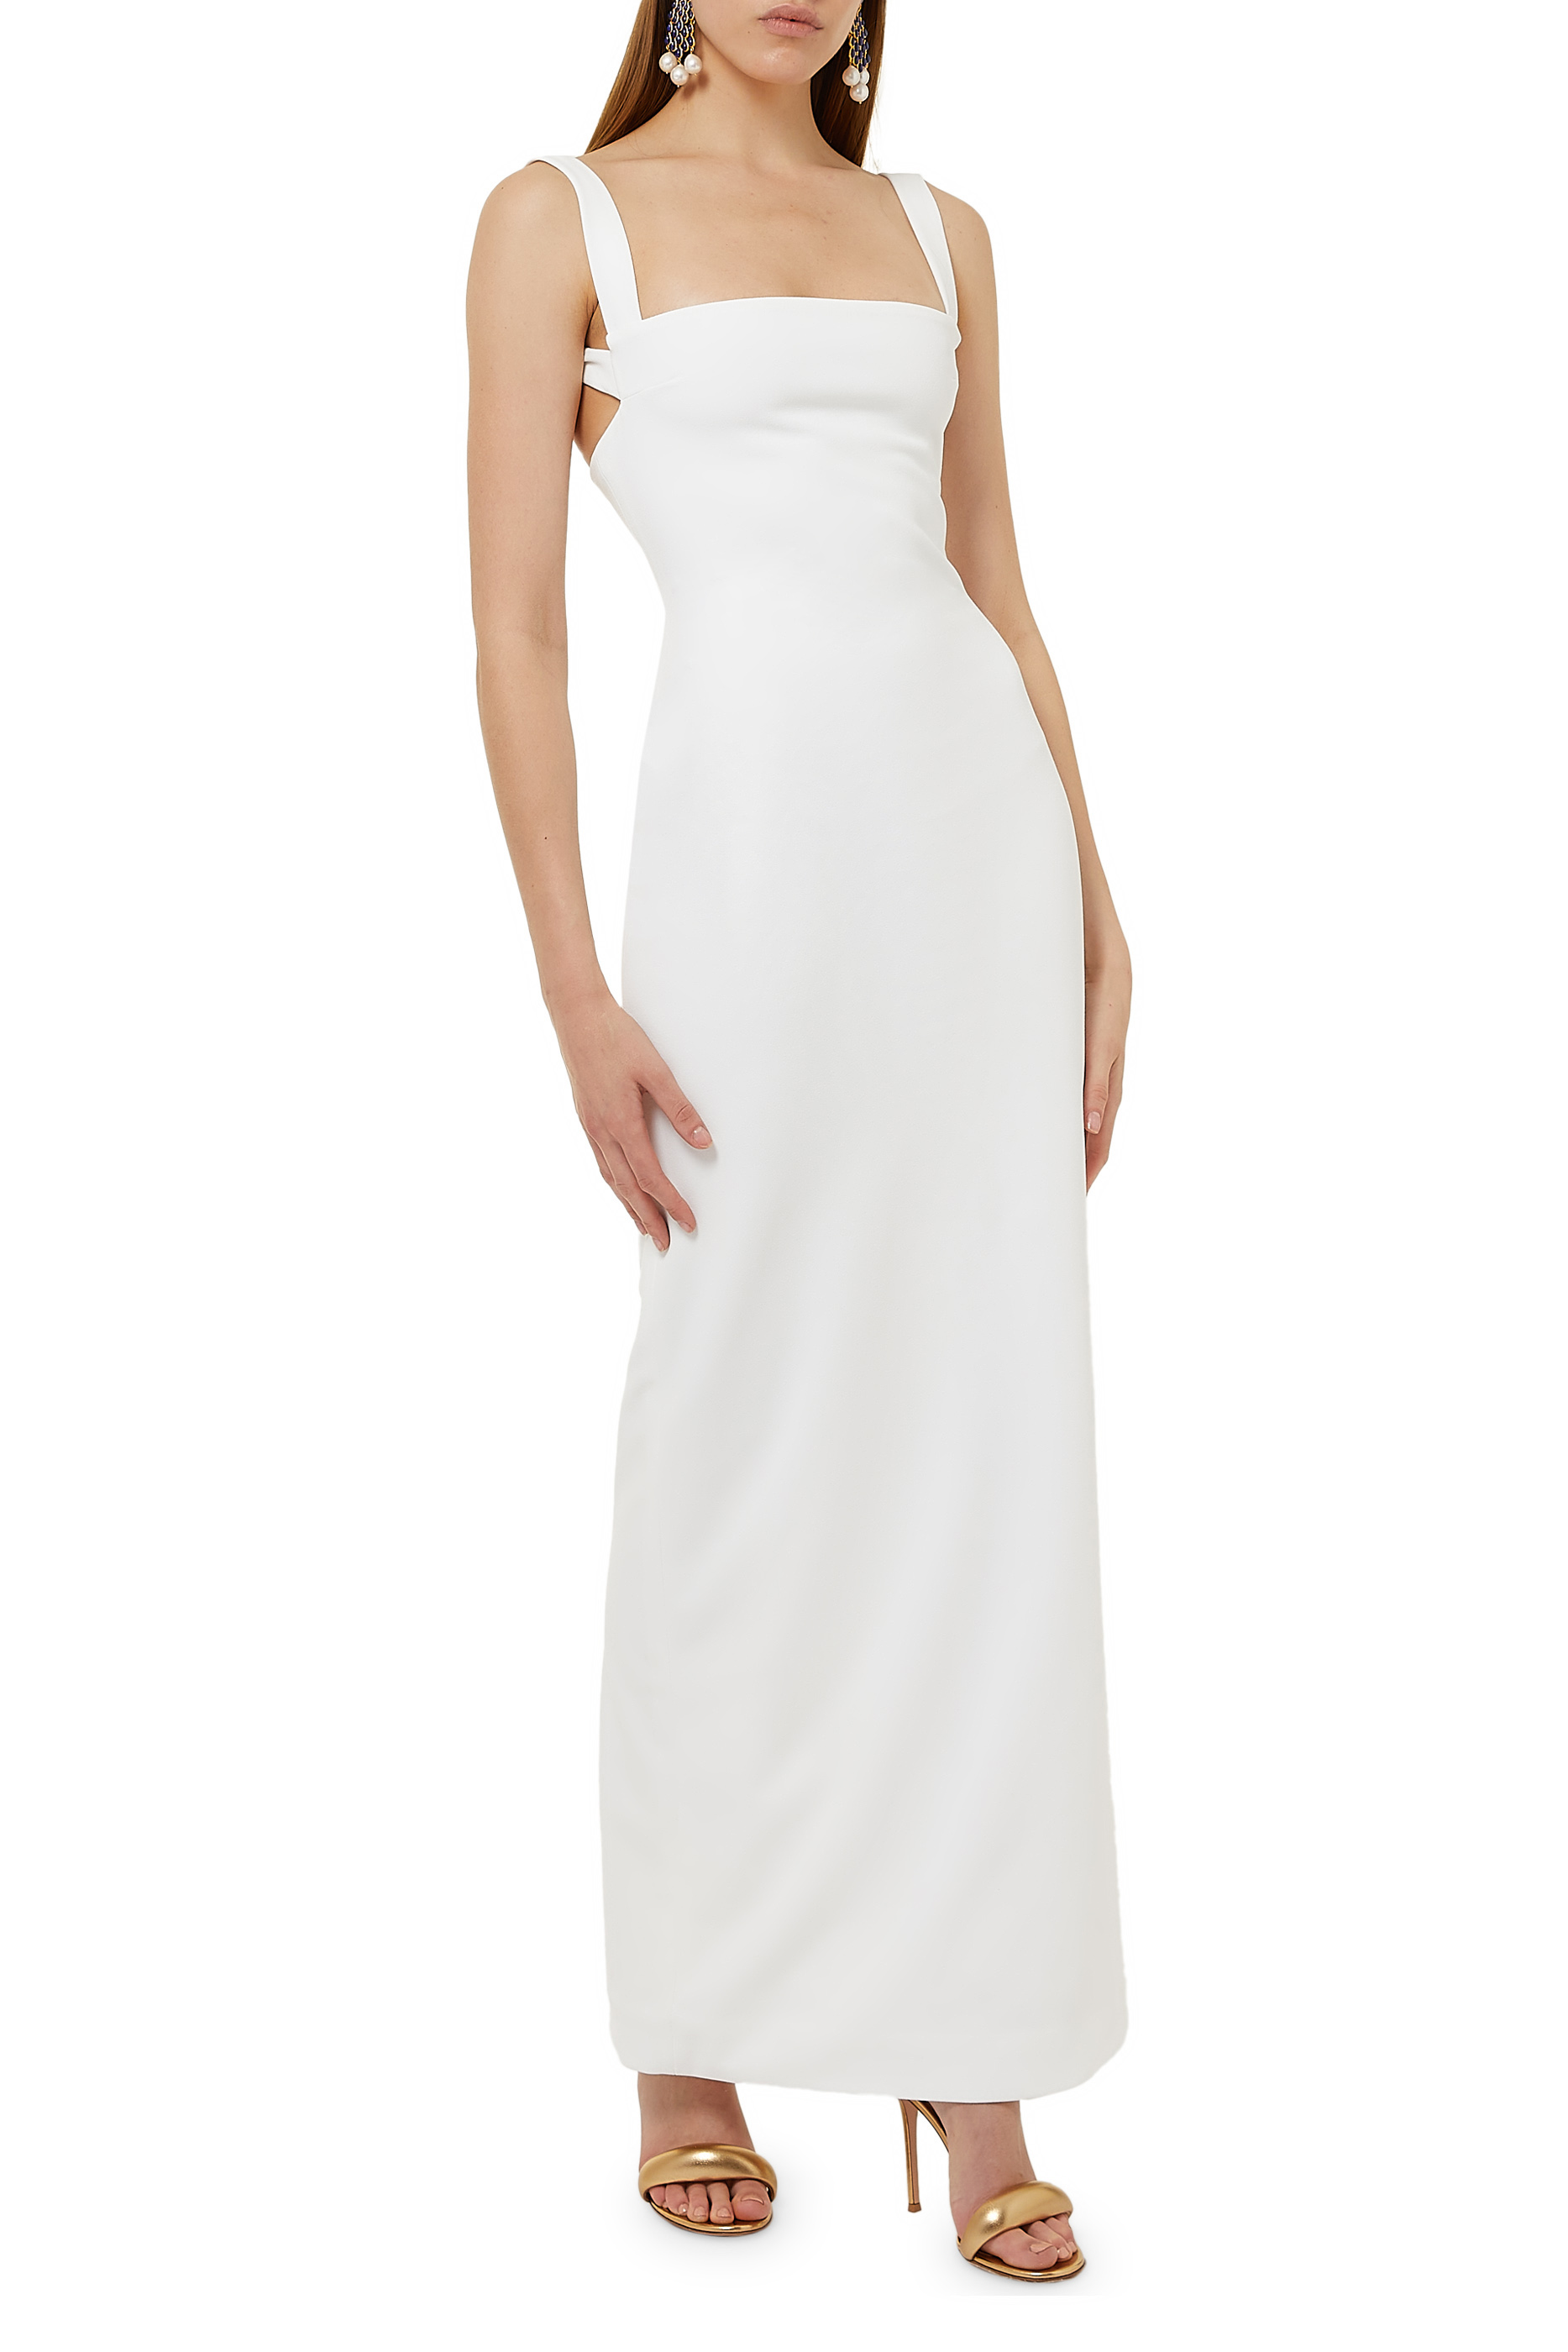 Buy Solace London Joni Maxi Dress - Womens for QAR 1350.00 Women's ...